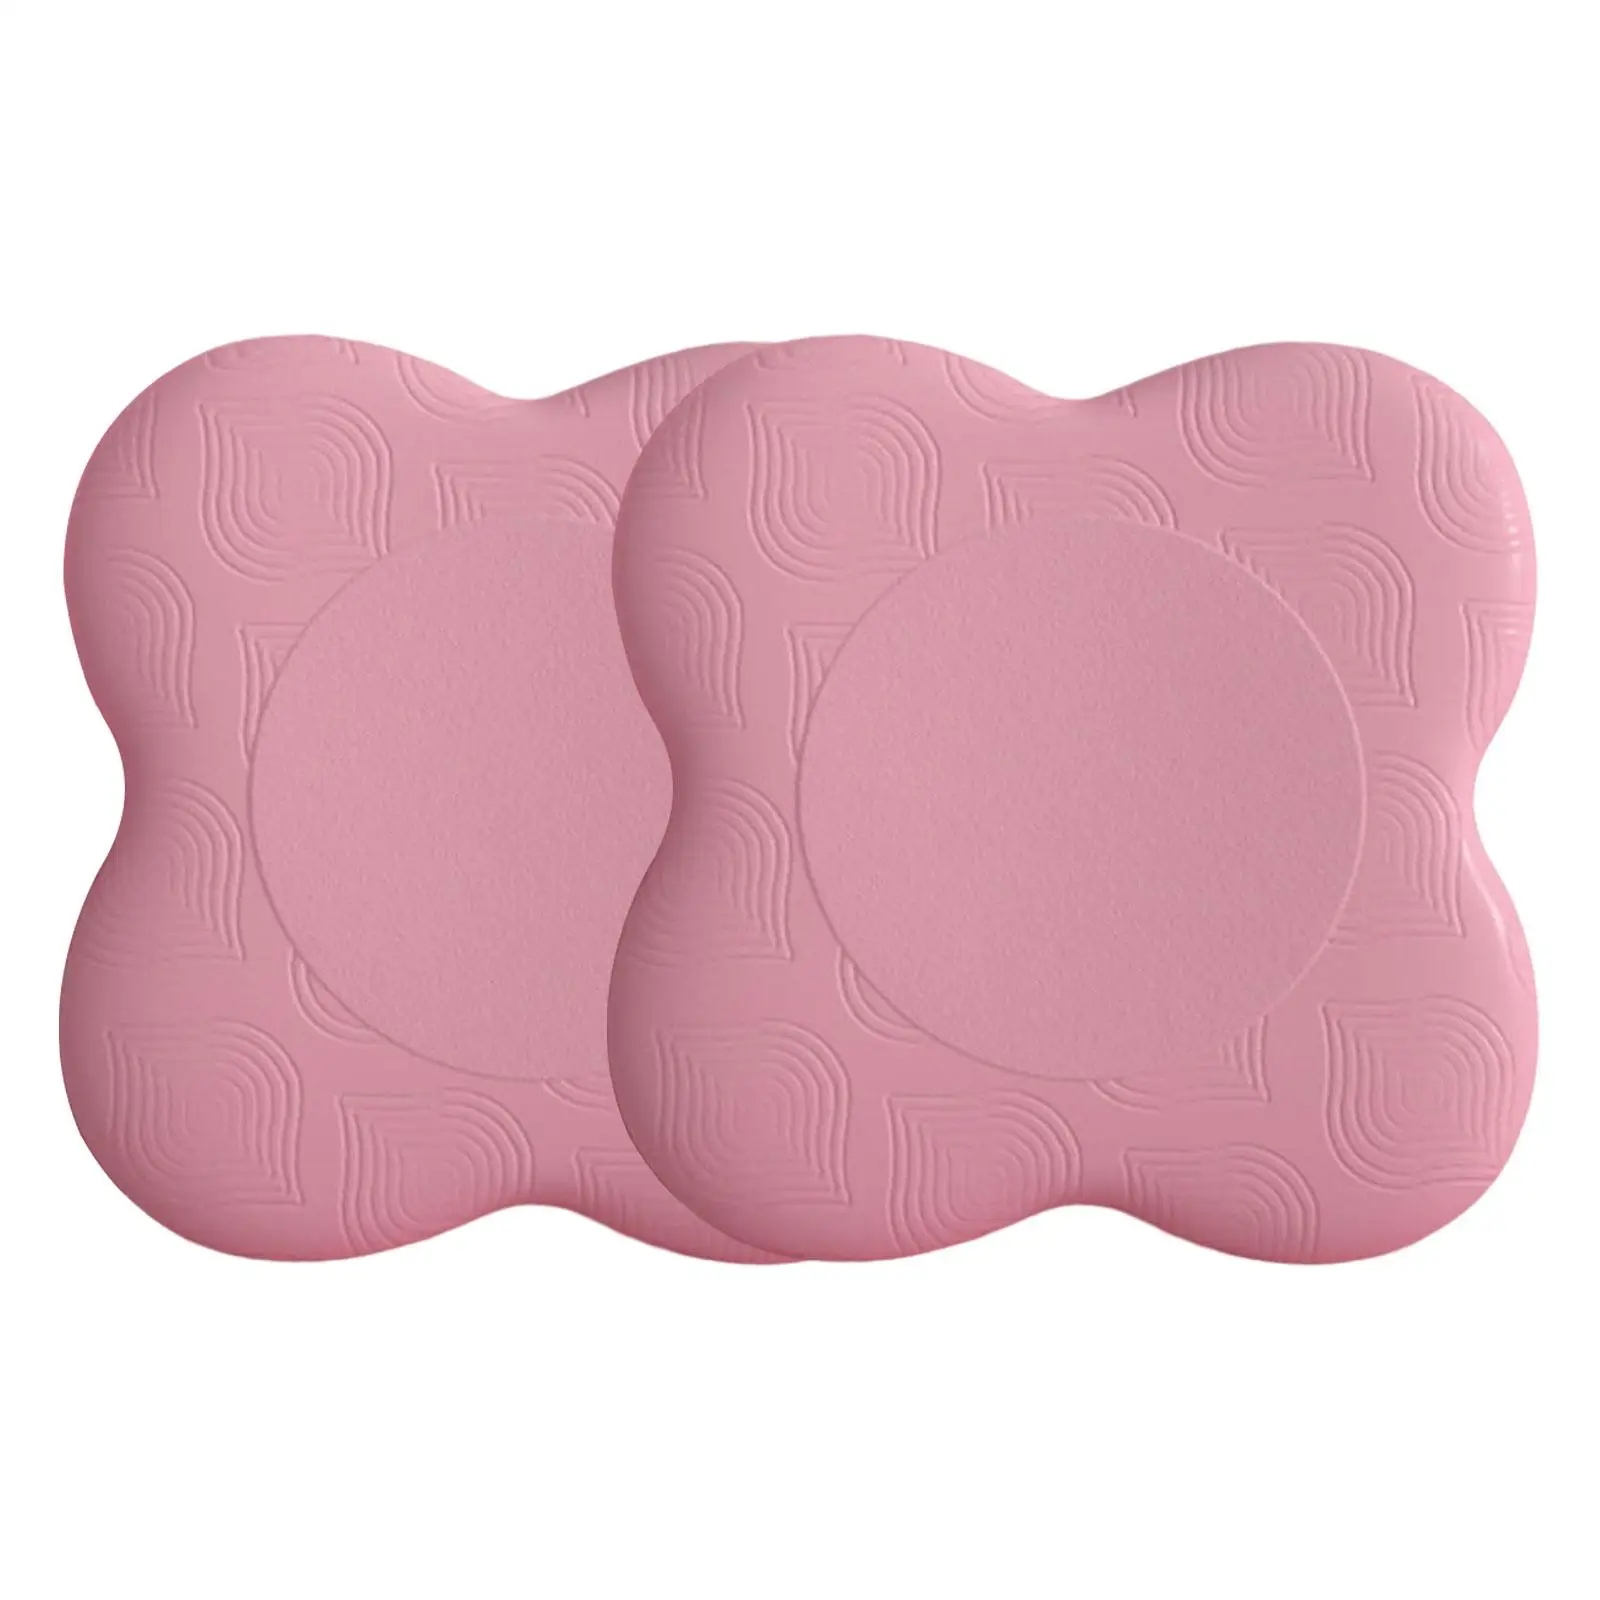 2x Yoga Knee Pad Cushion Non Slip Comfortable Yoga Mat Accessory Balance Cushion for Hands Knee Pilates Meditation Floor